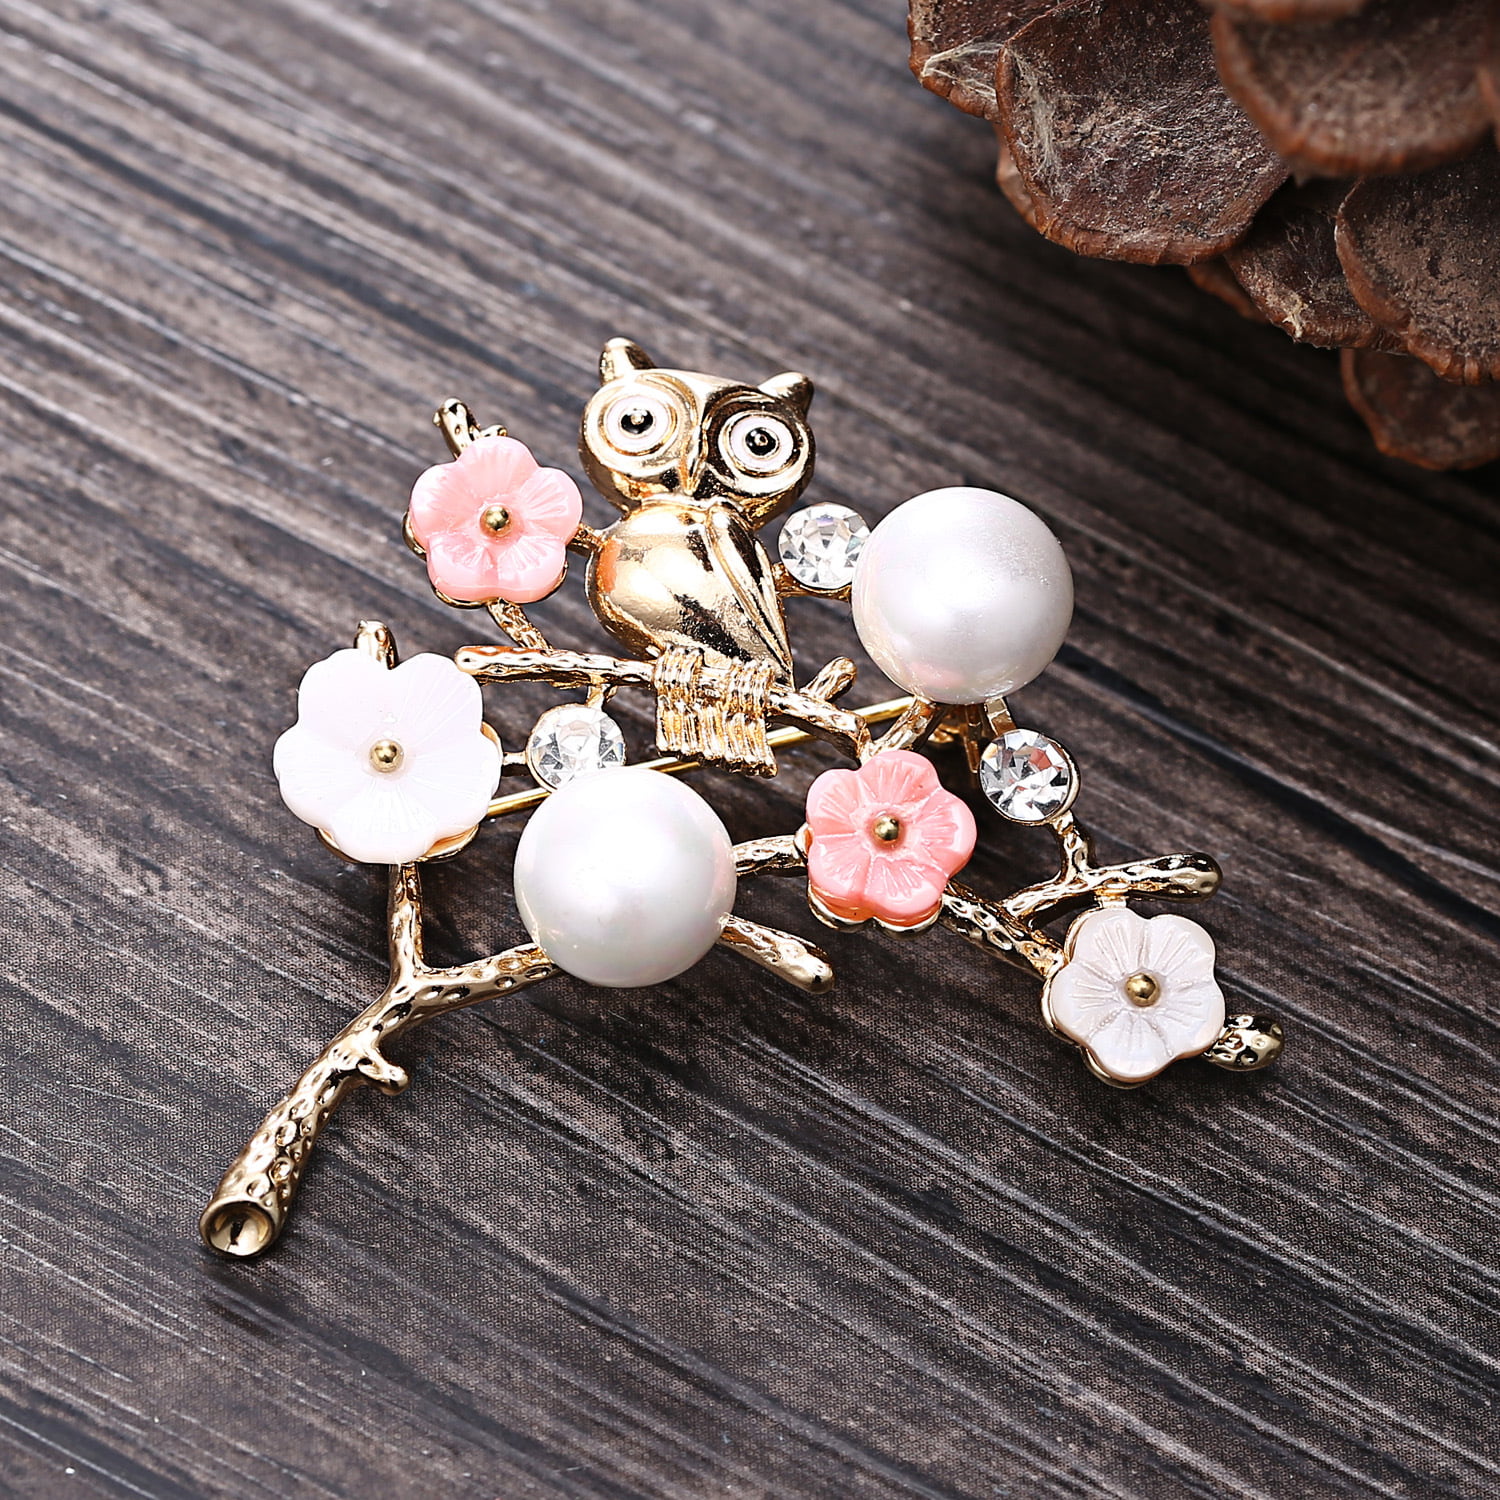 Pretty Cute Natural Pearls Rhinestone Beads Fashion Jewelry Brooch Pin Gift Box 